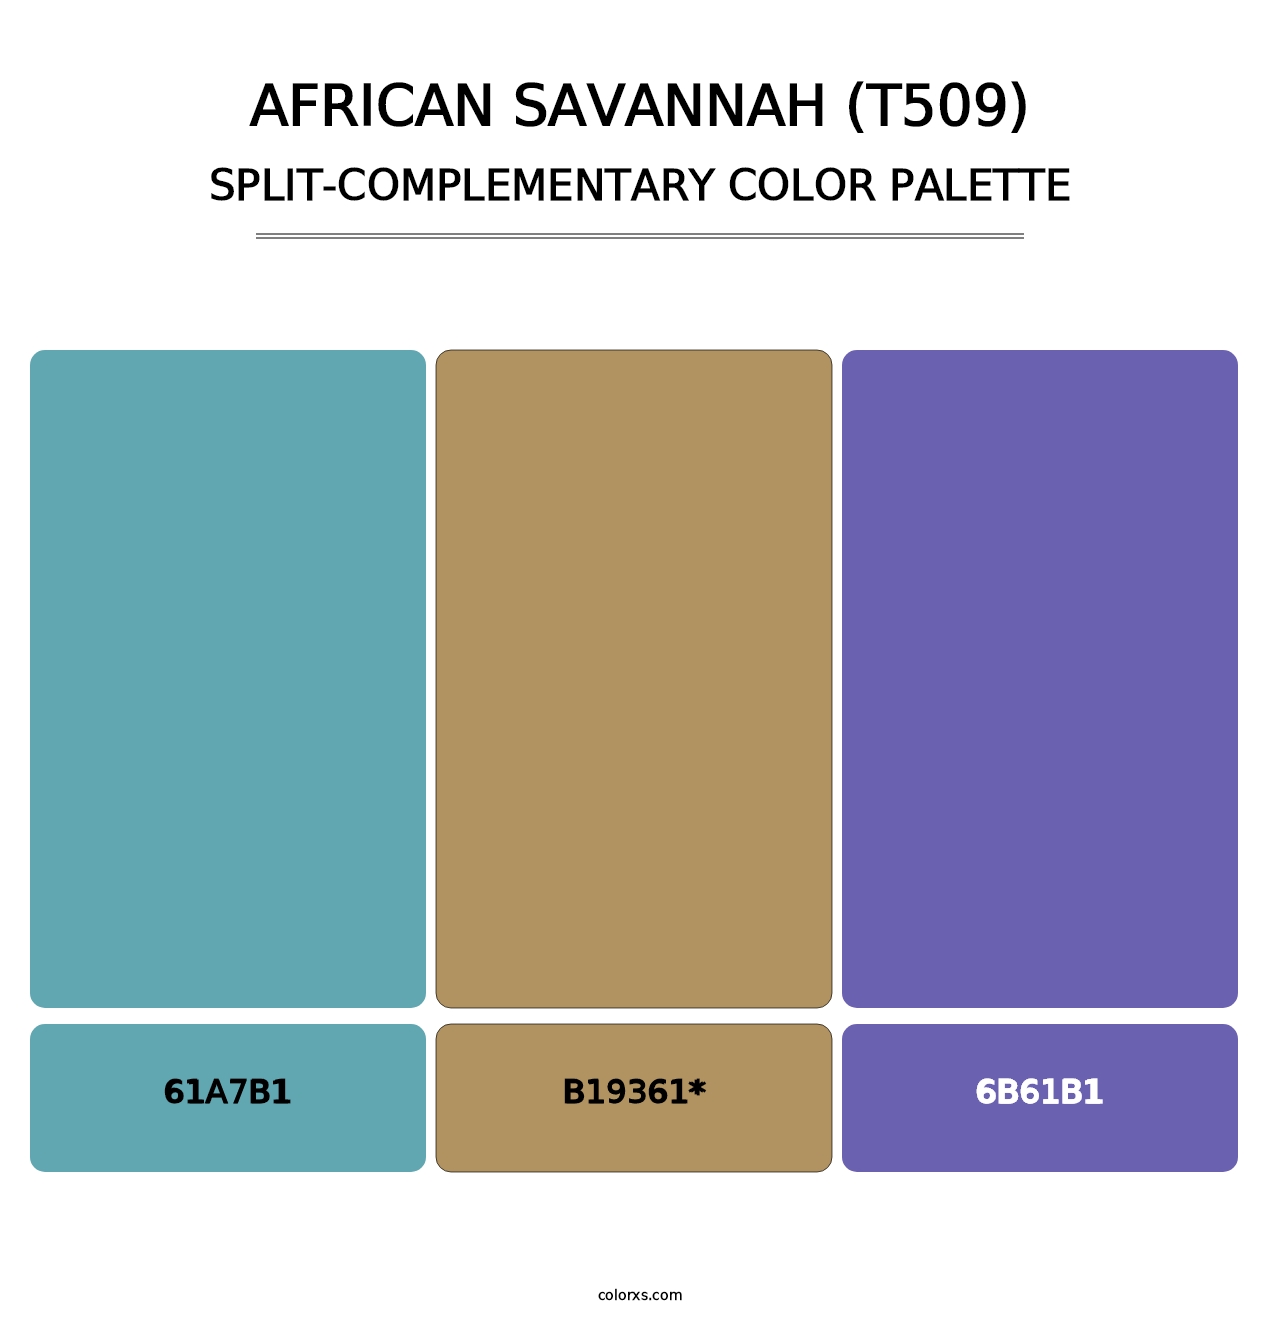 African Savannah (T509) - Split-Complementary Color Palette